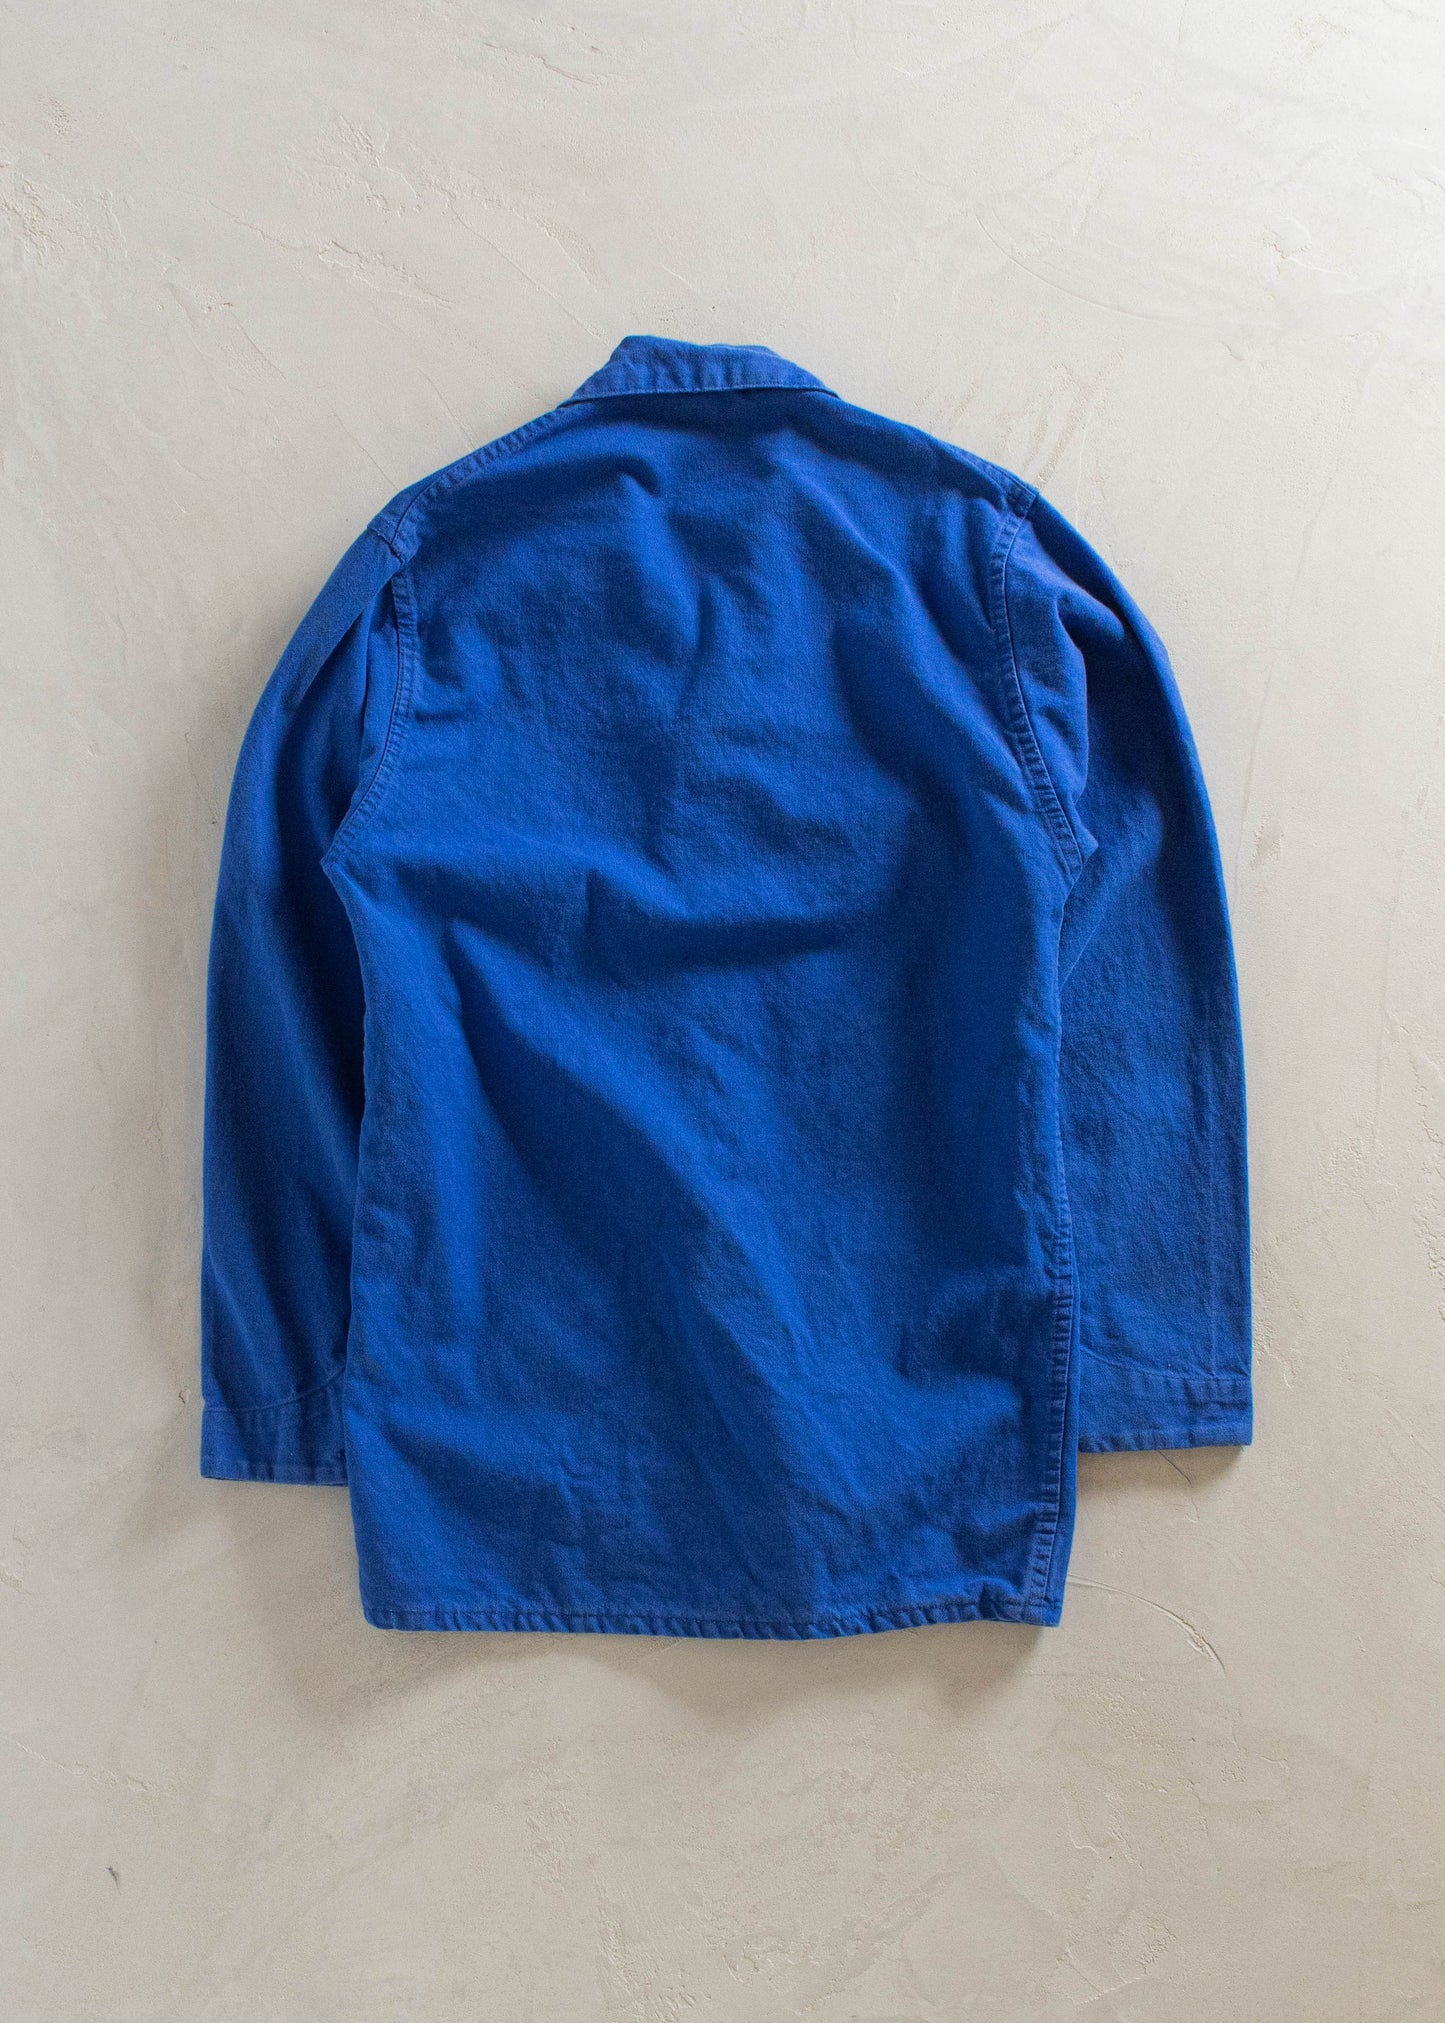 1980s French Workwear Chore Jacket Size 2XS/XS